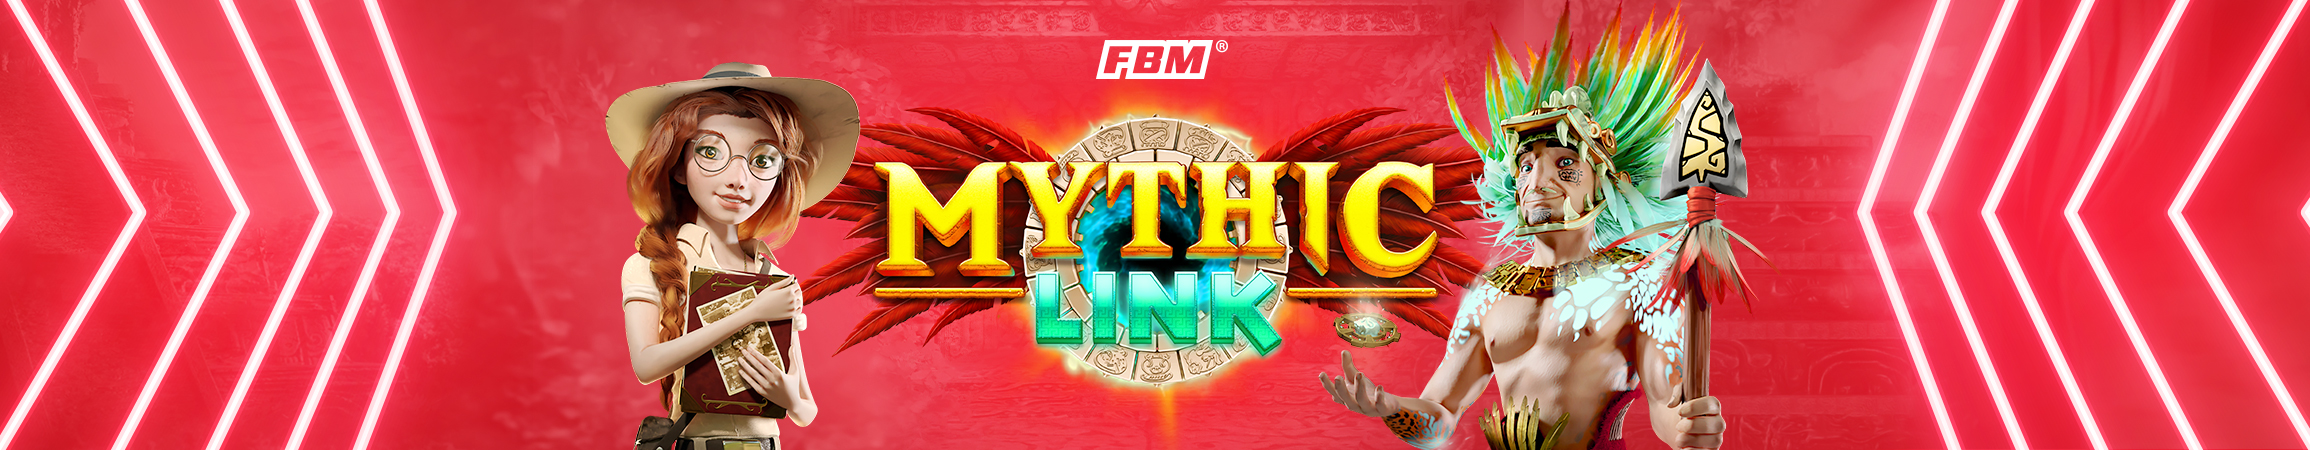 FBM® installs Mythic Link® in Casino Filipino Binondo